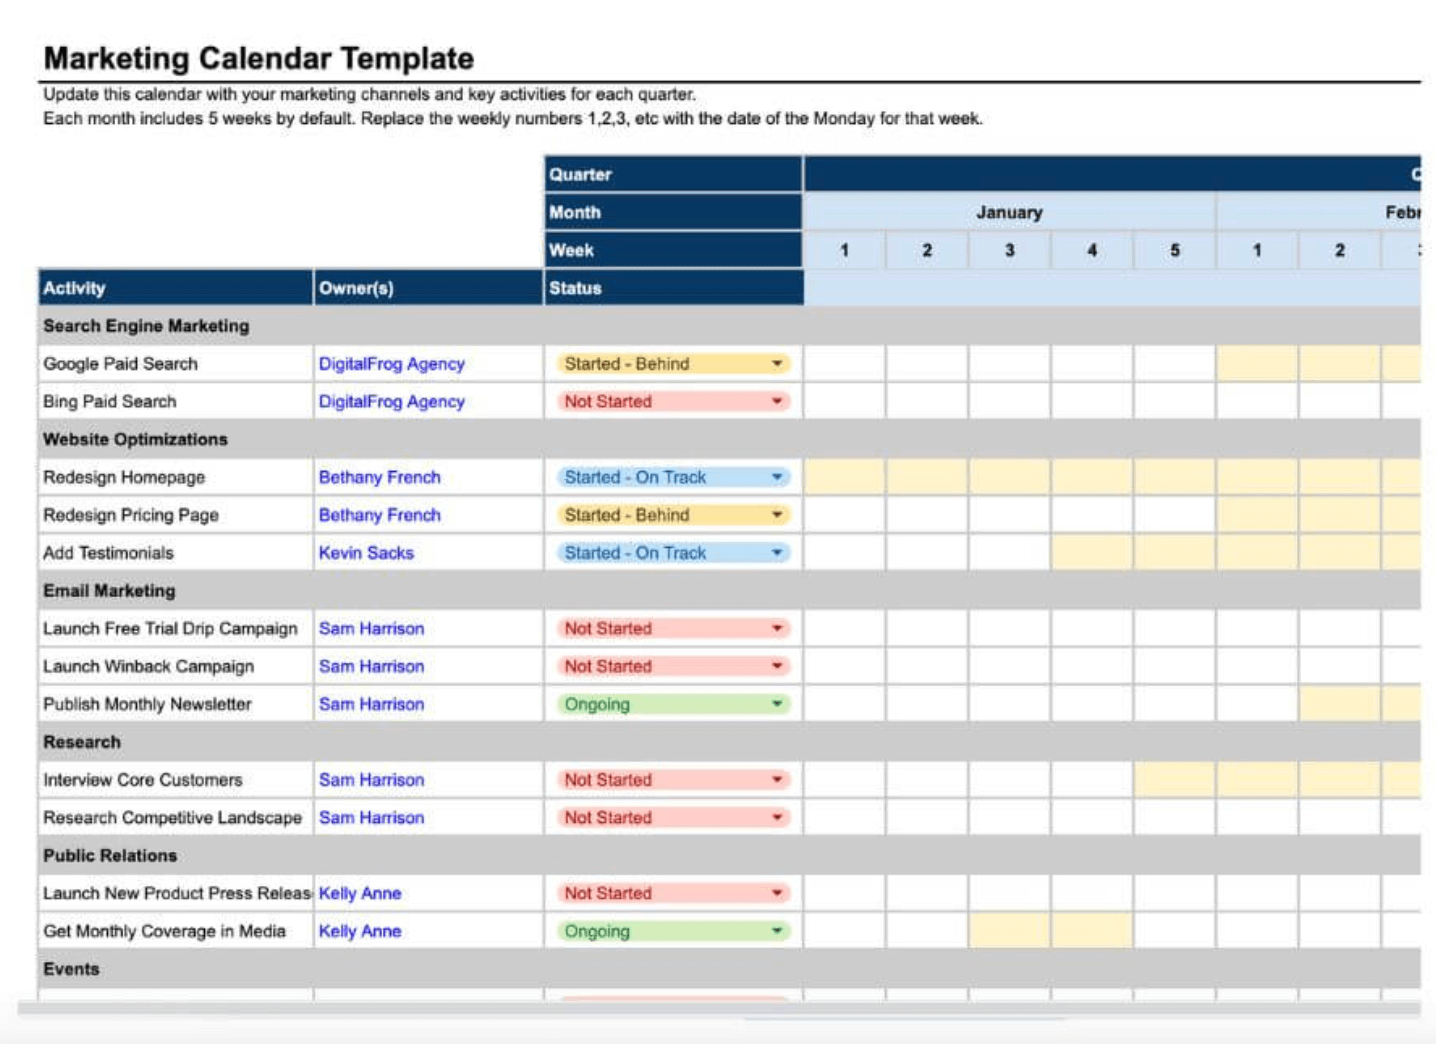 Marketing calendar template in GBT